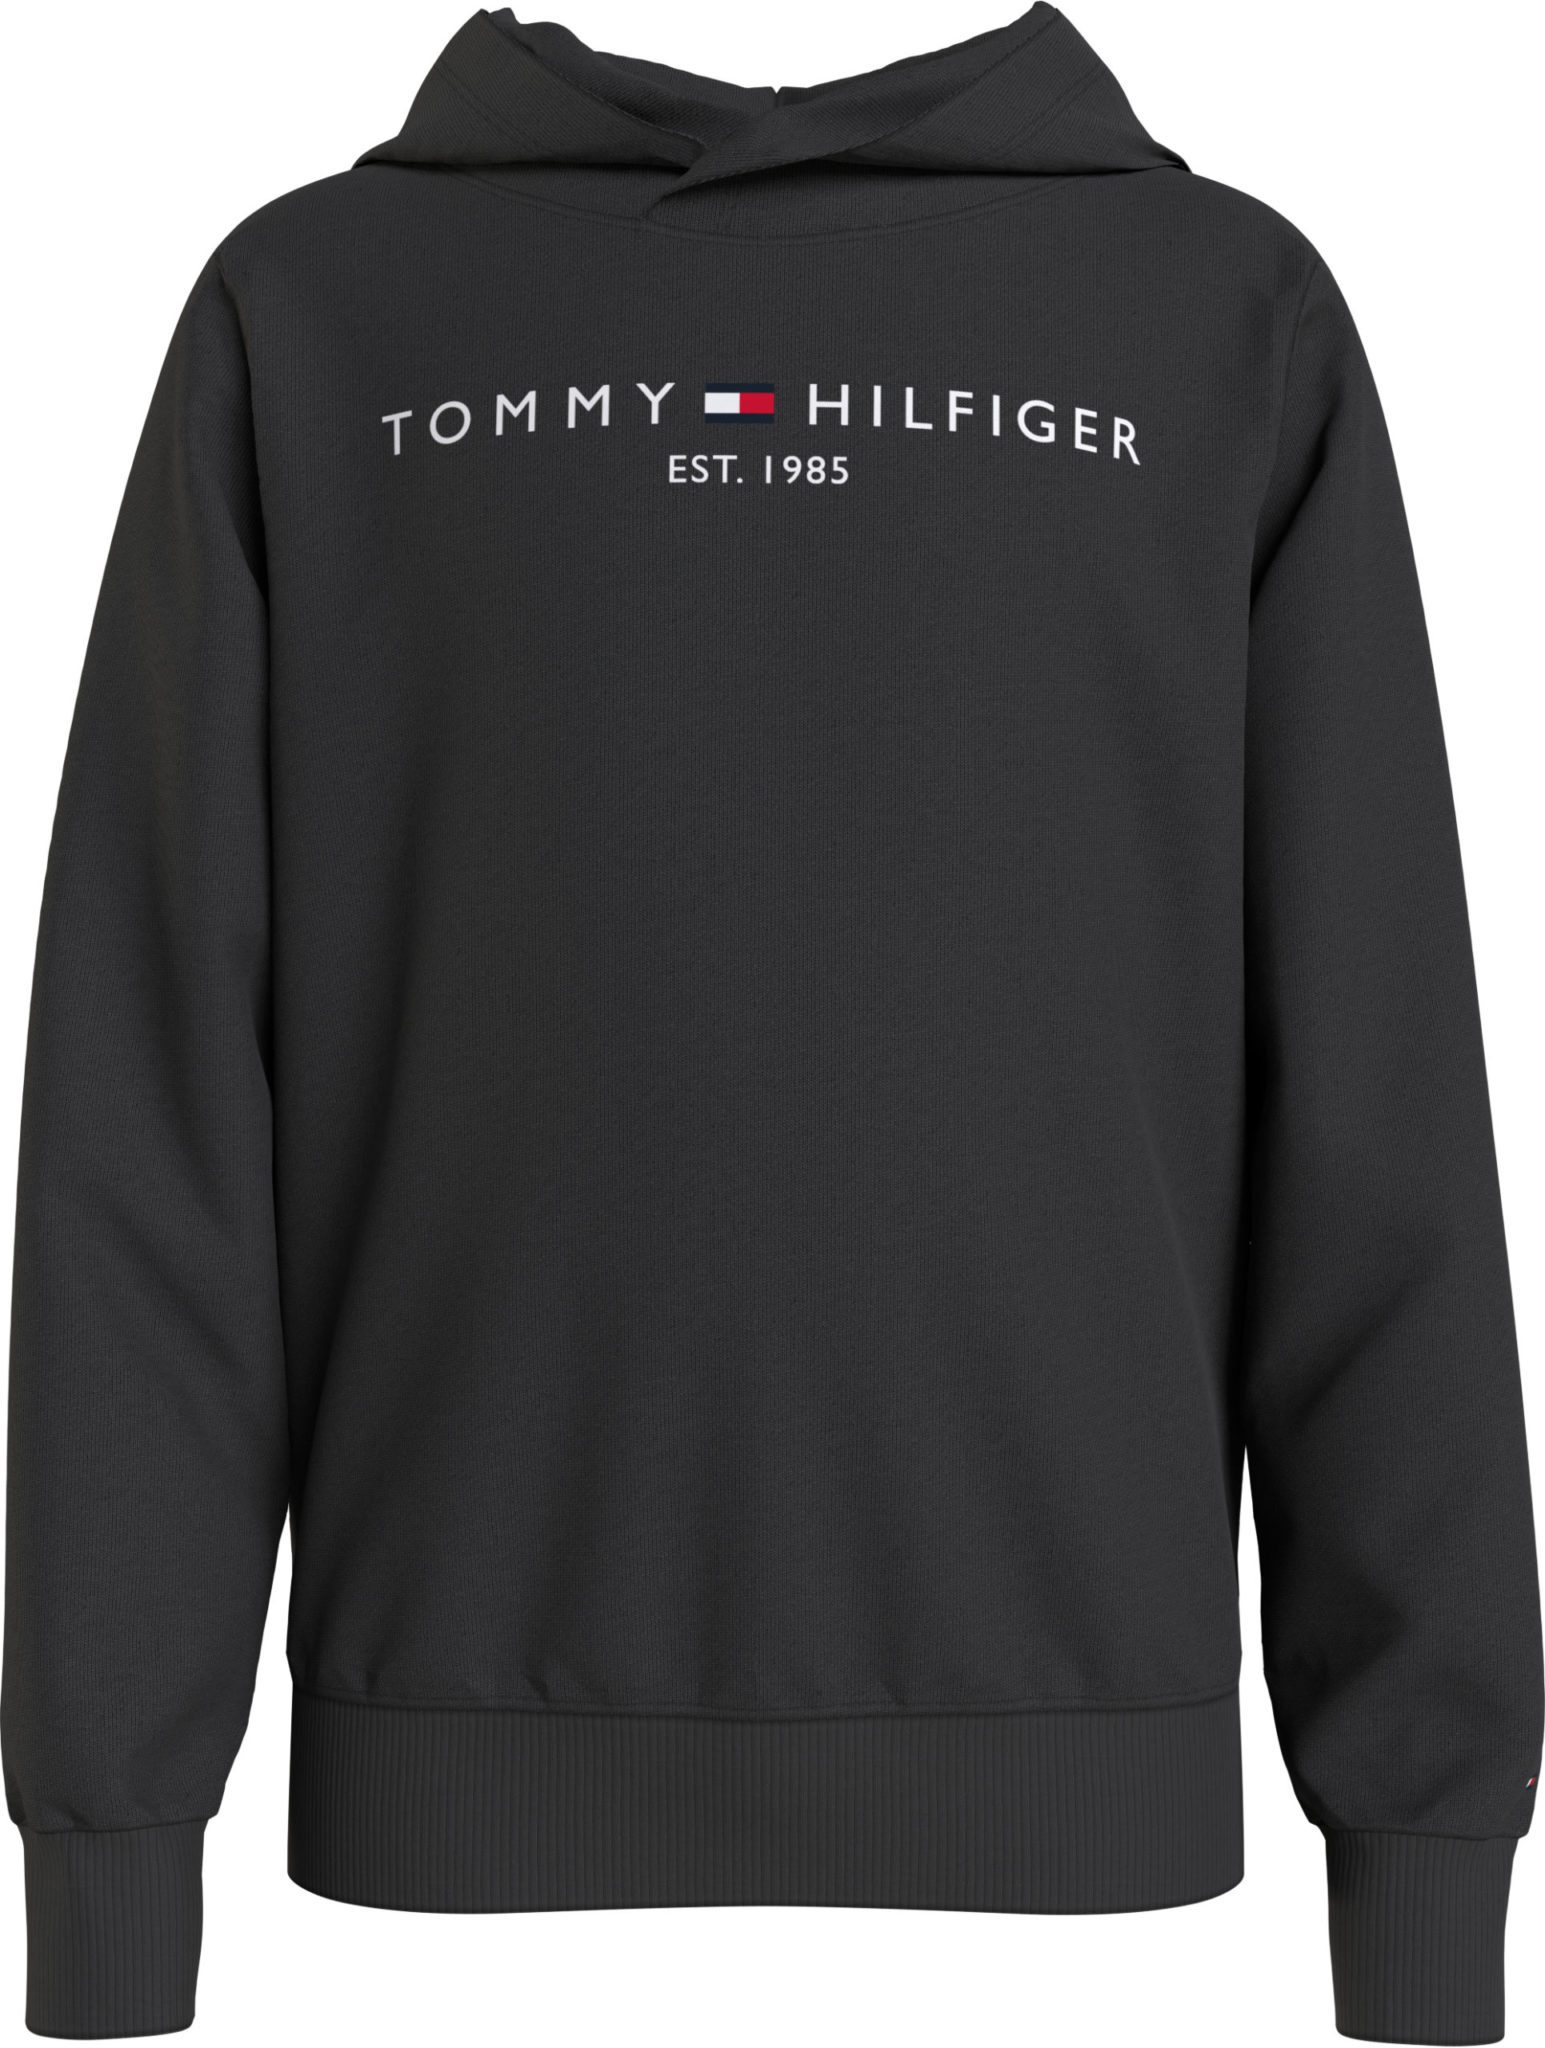 Tommy Hilfiger Black Tracksuit 6707 - Little Angels Childrenswear